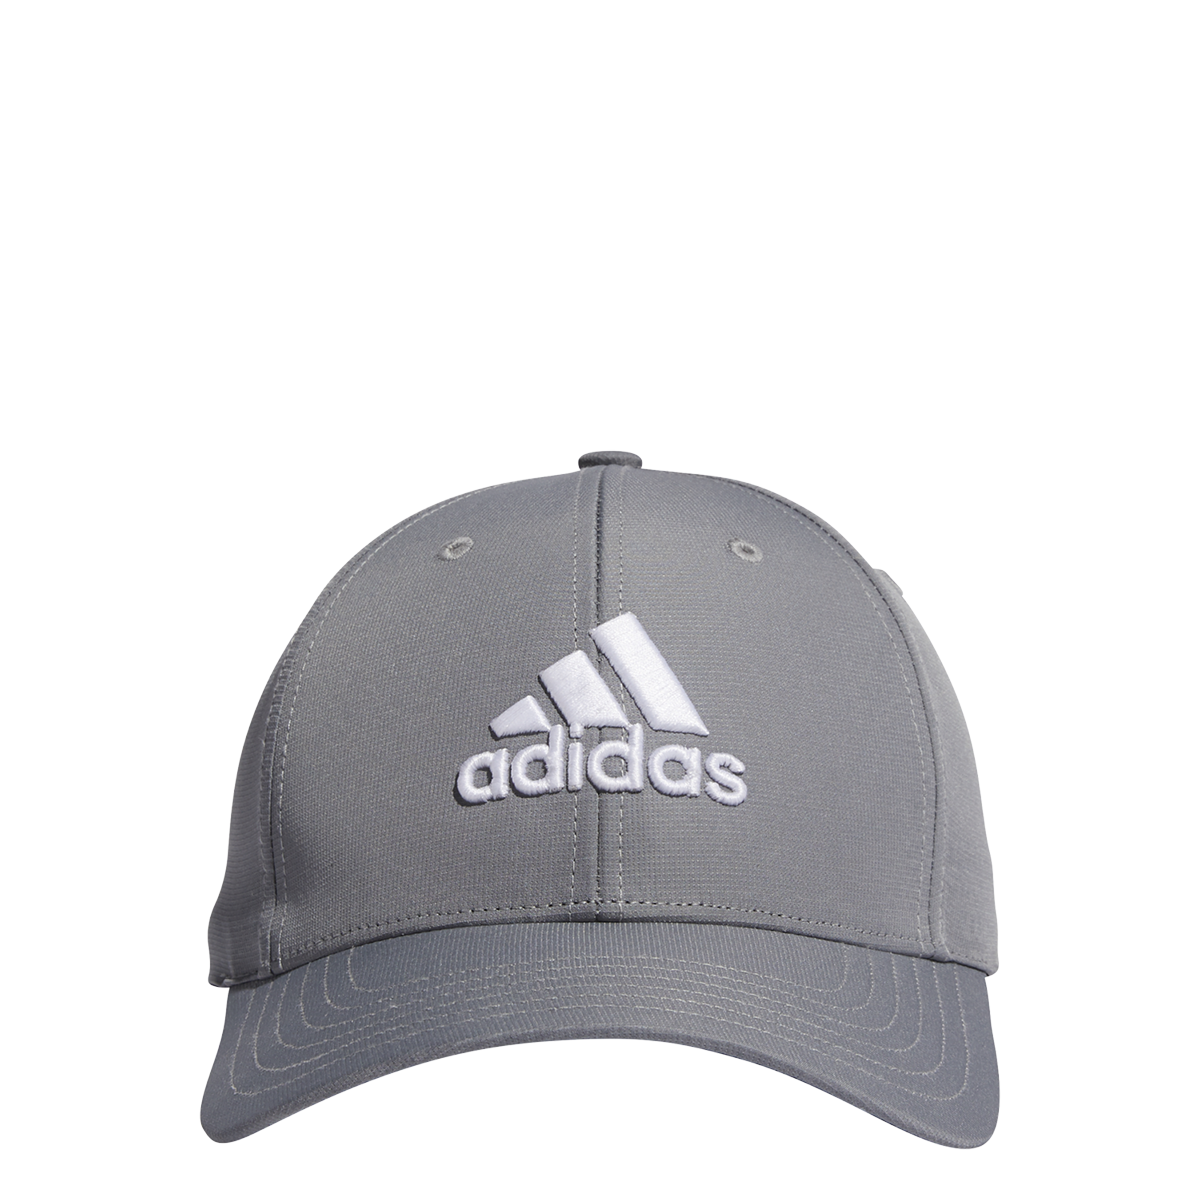 adidas performance hat